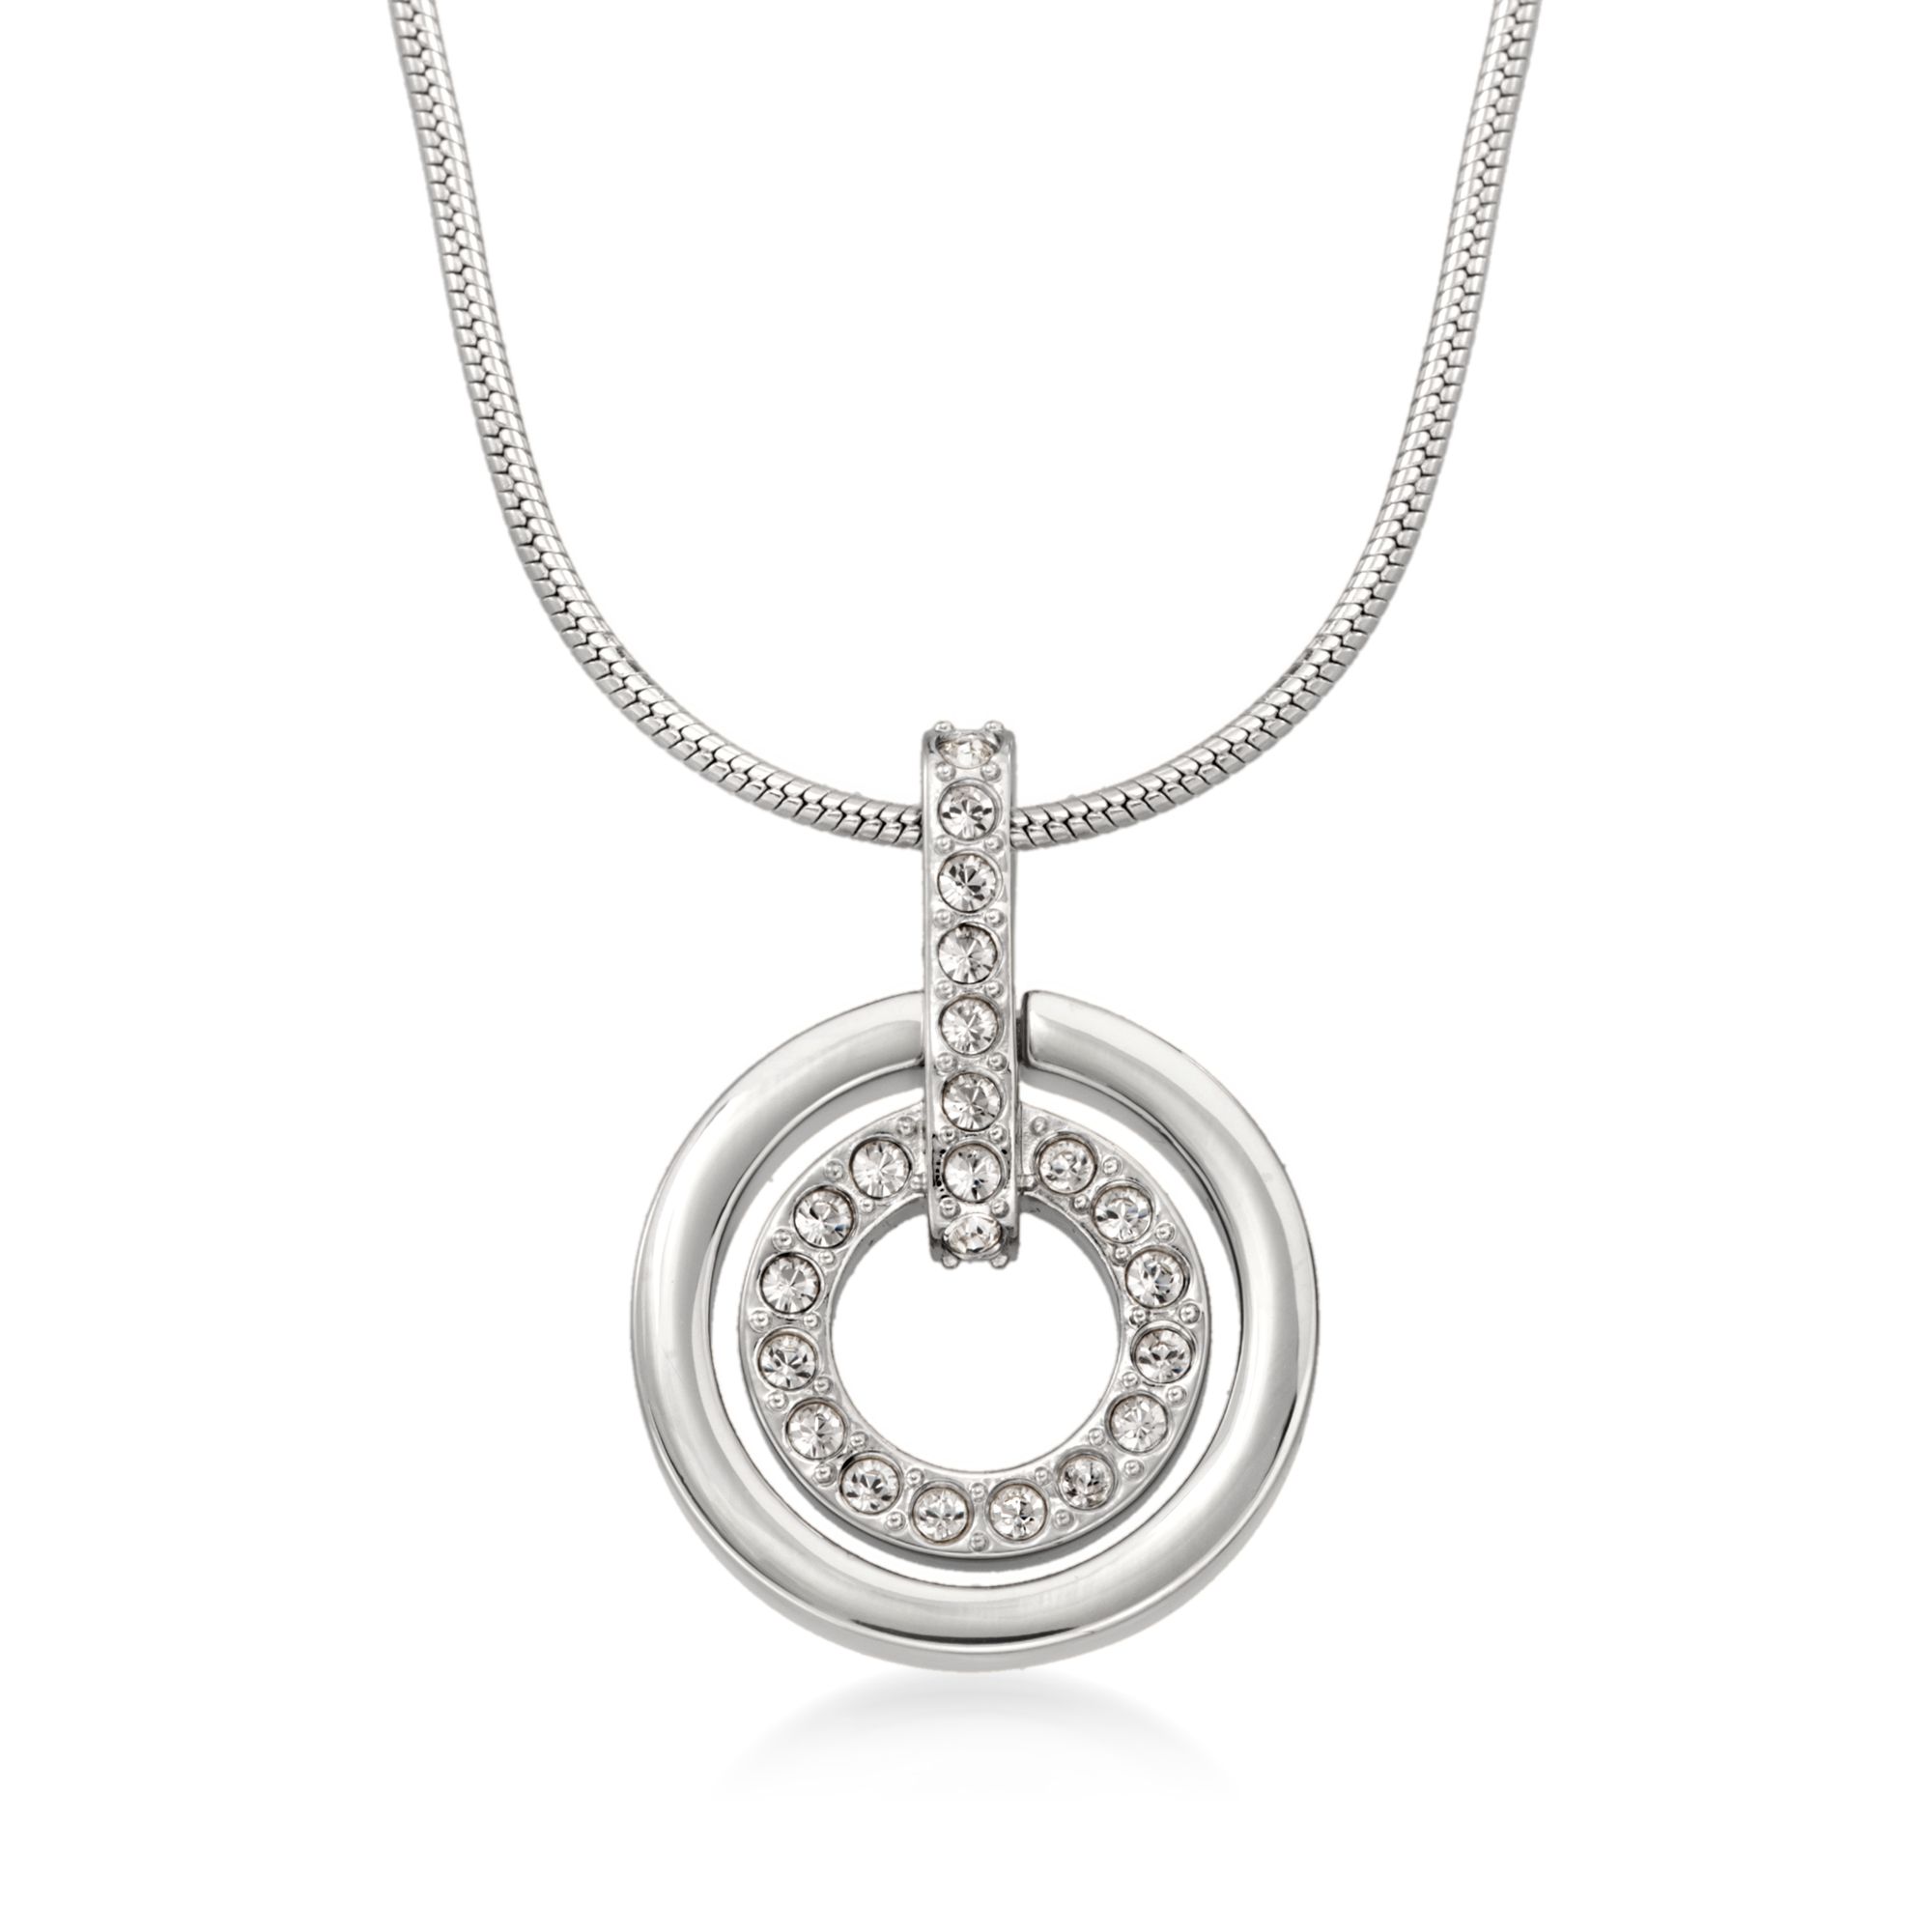 Swarovski Crystal Double Circle Pendant Necklace in Silvertone. 16.5" |  Ross-Simons